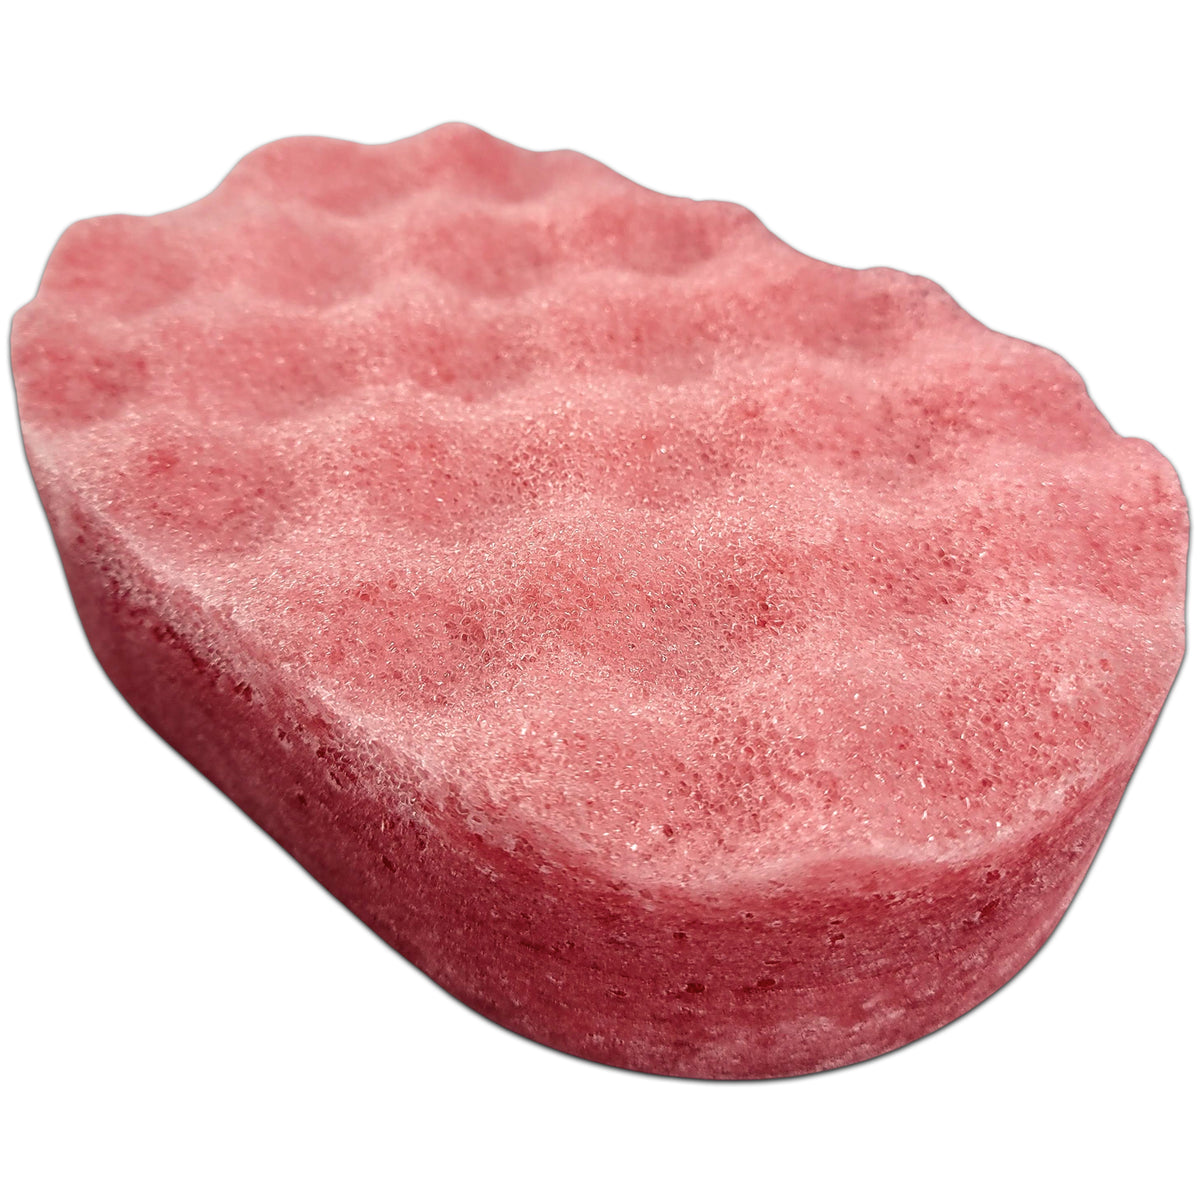 Missing Cherry Soap Sponges